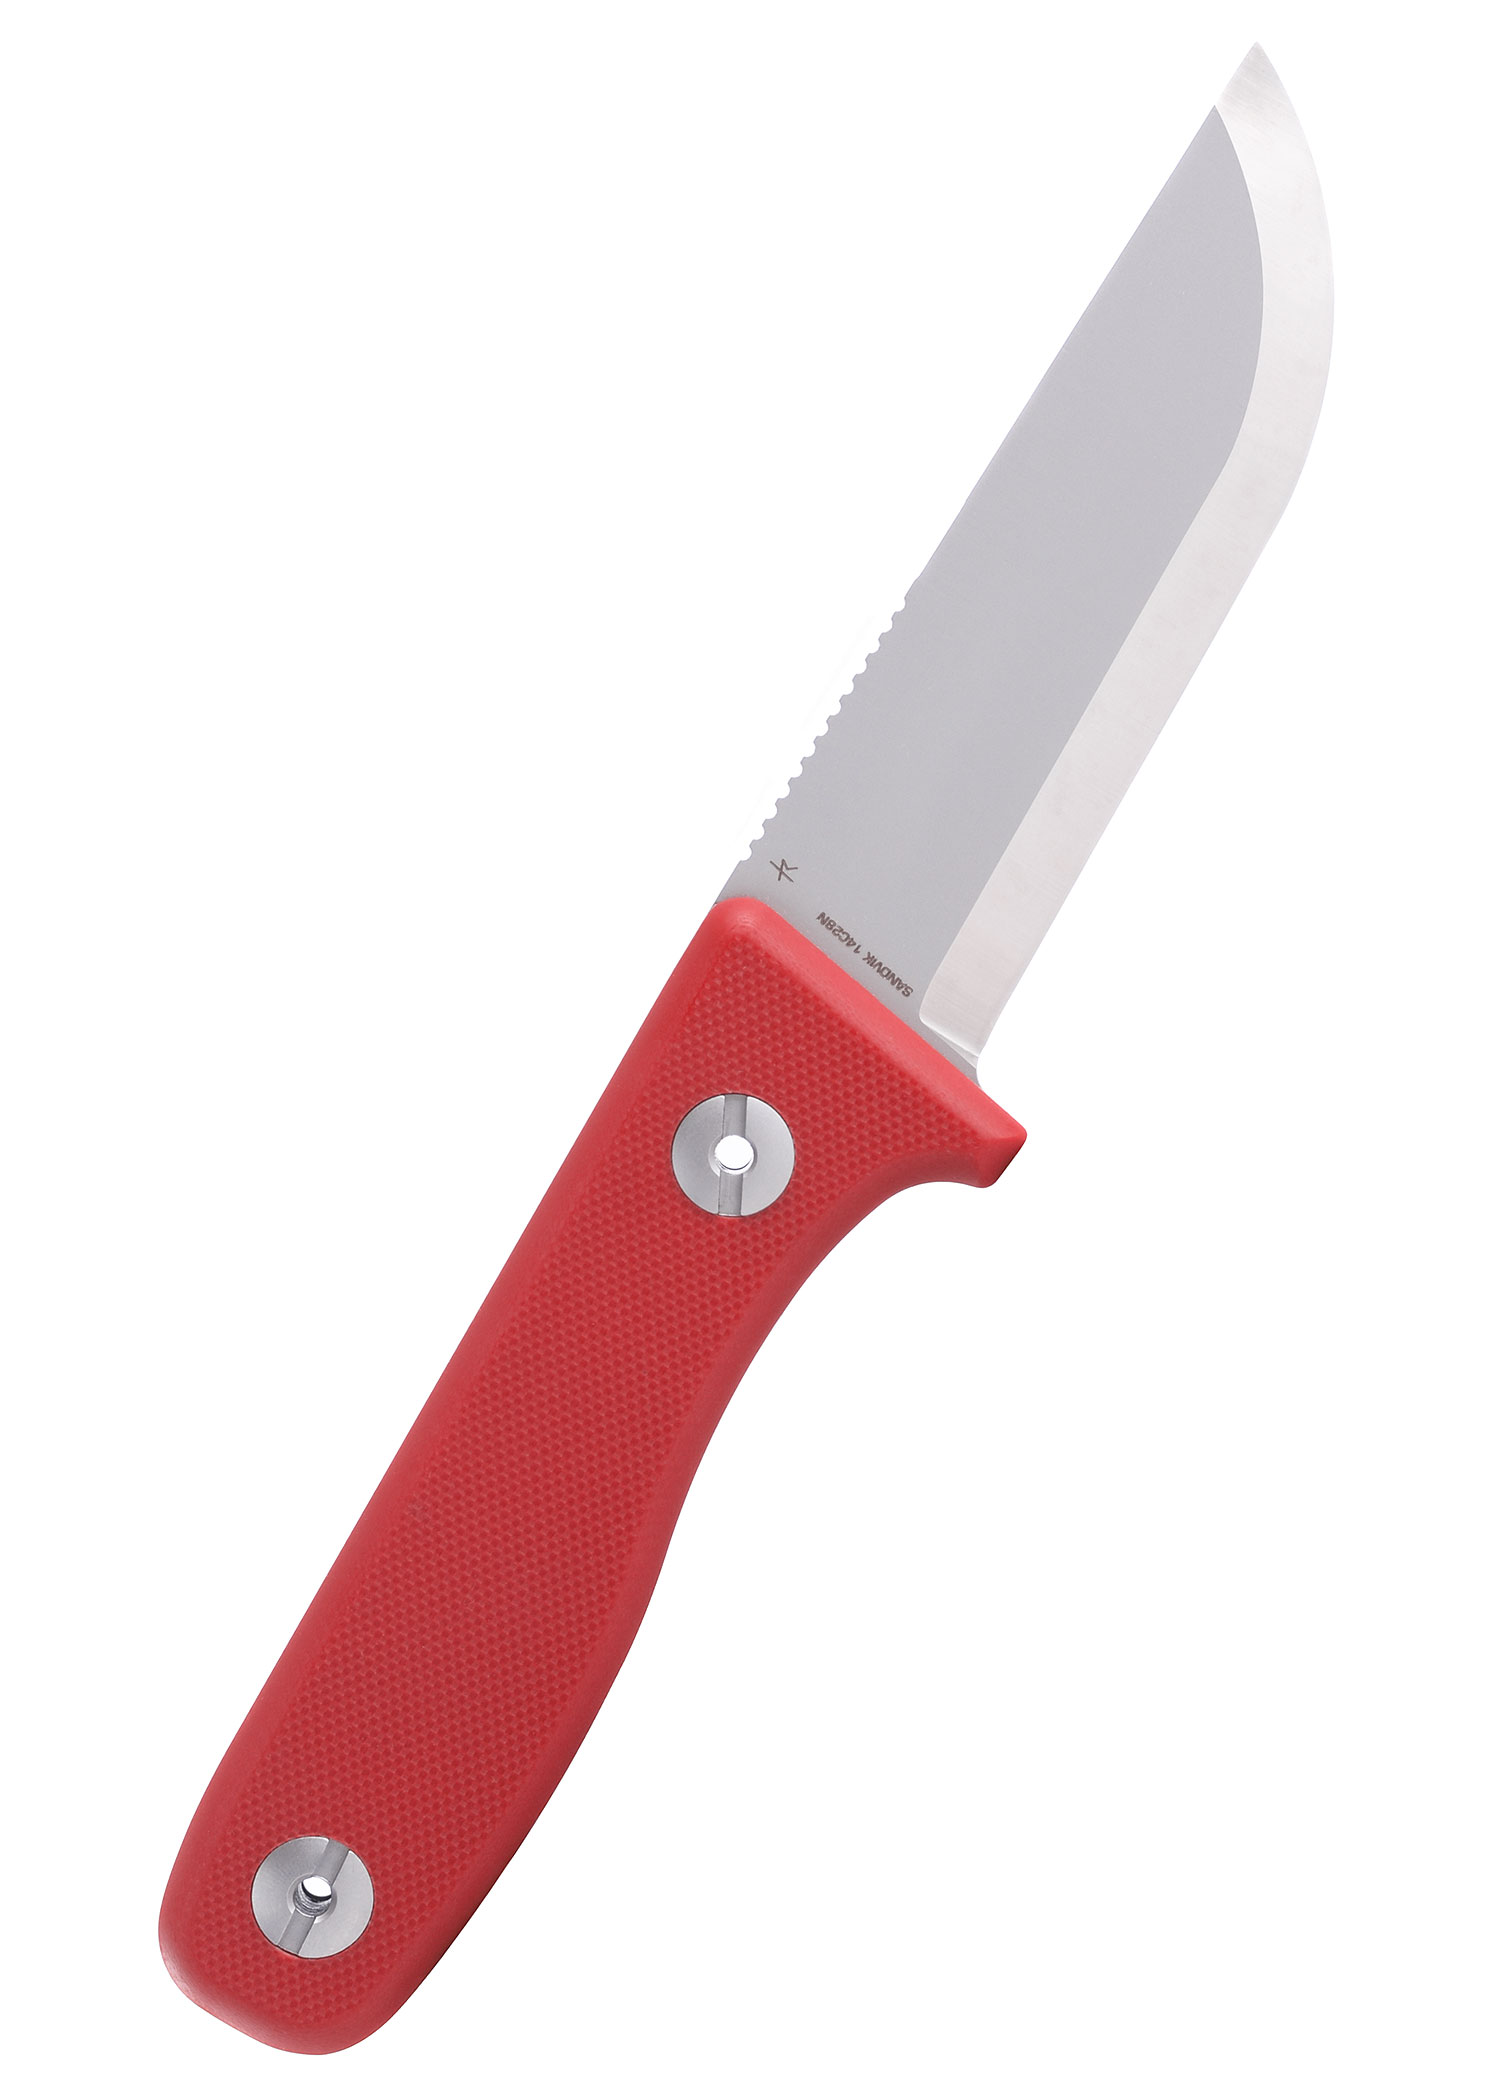 At last, a decent bushcraft knife for kids! The Schnitzel DU